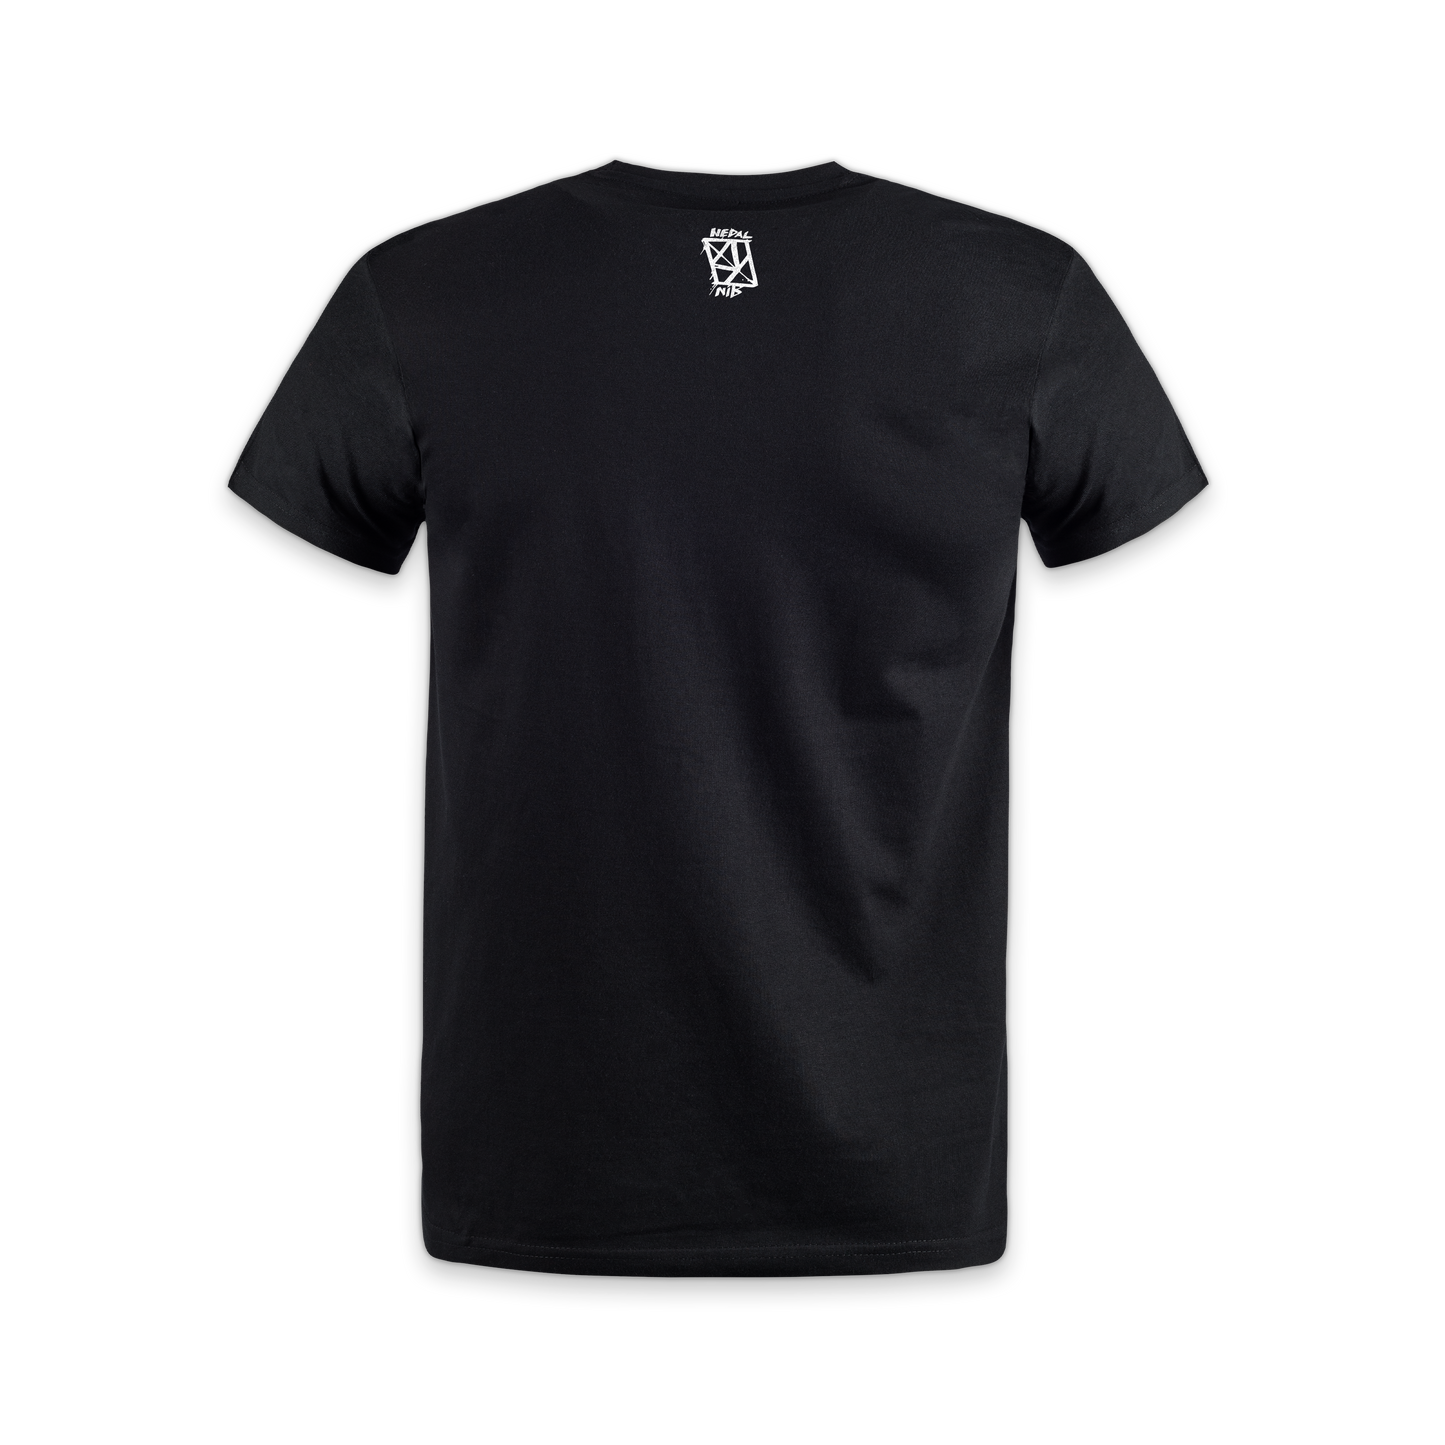 "Life is Battle" T-Shirt black edit.